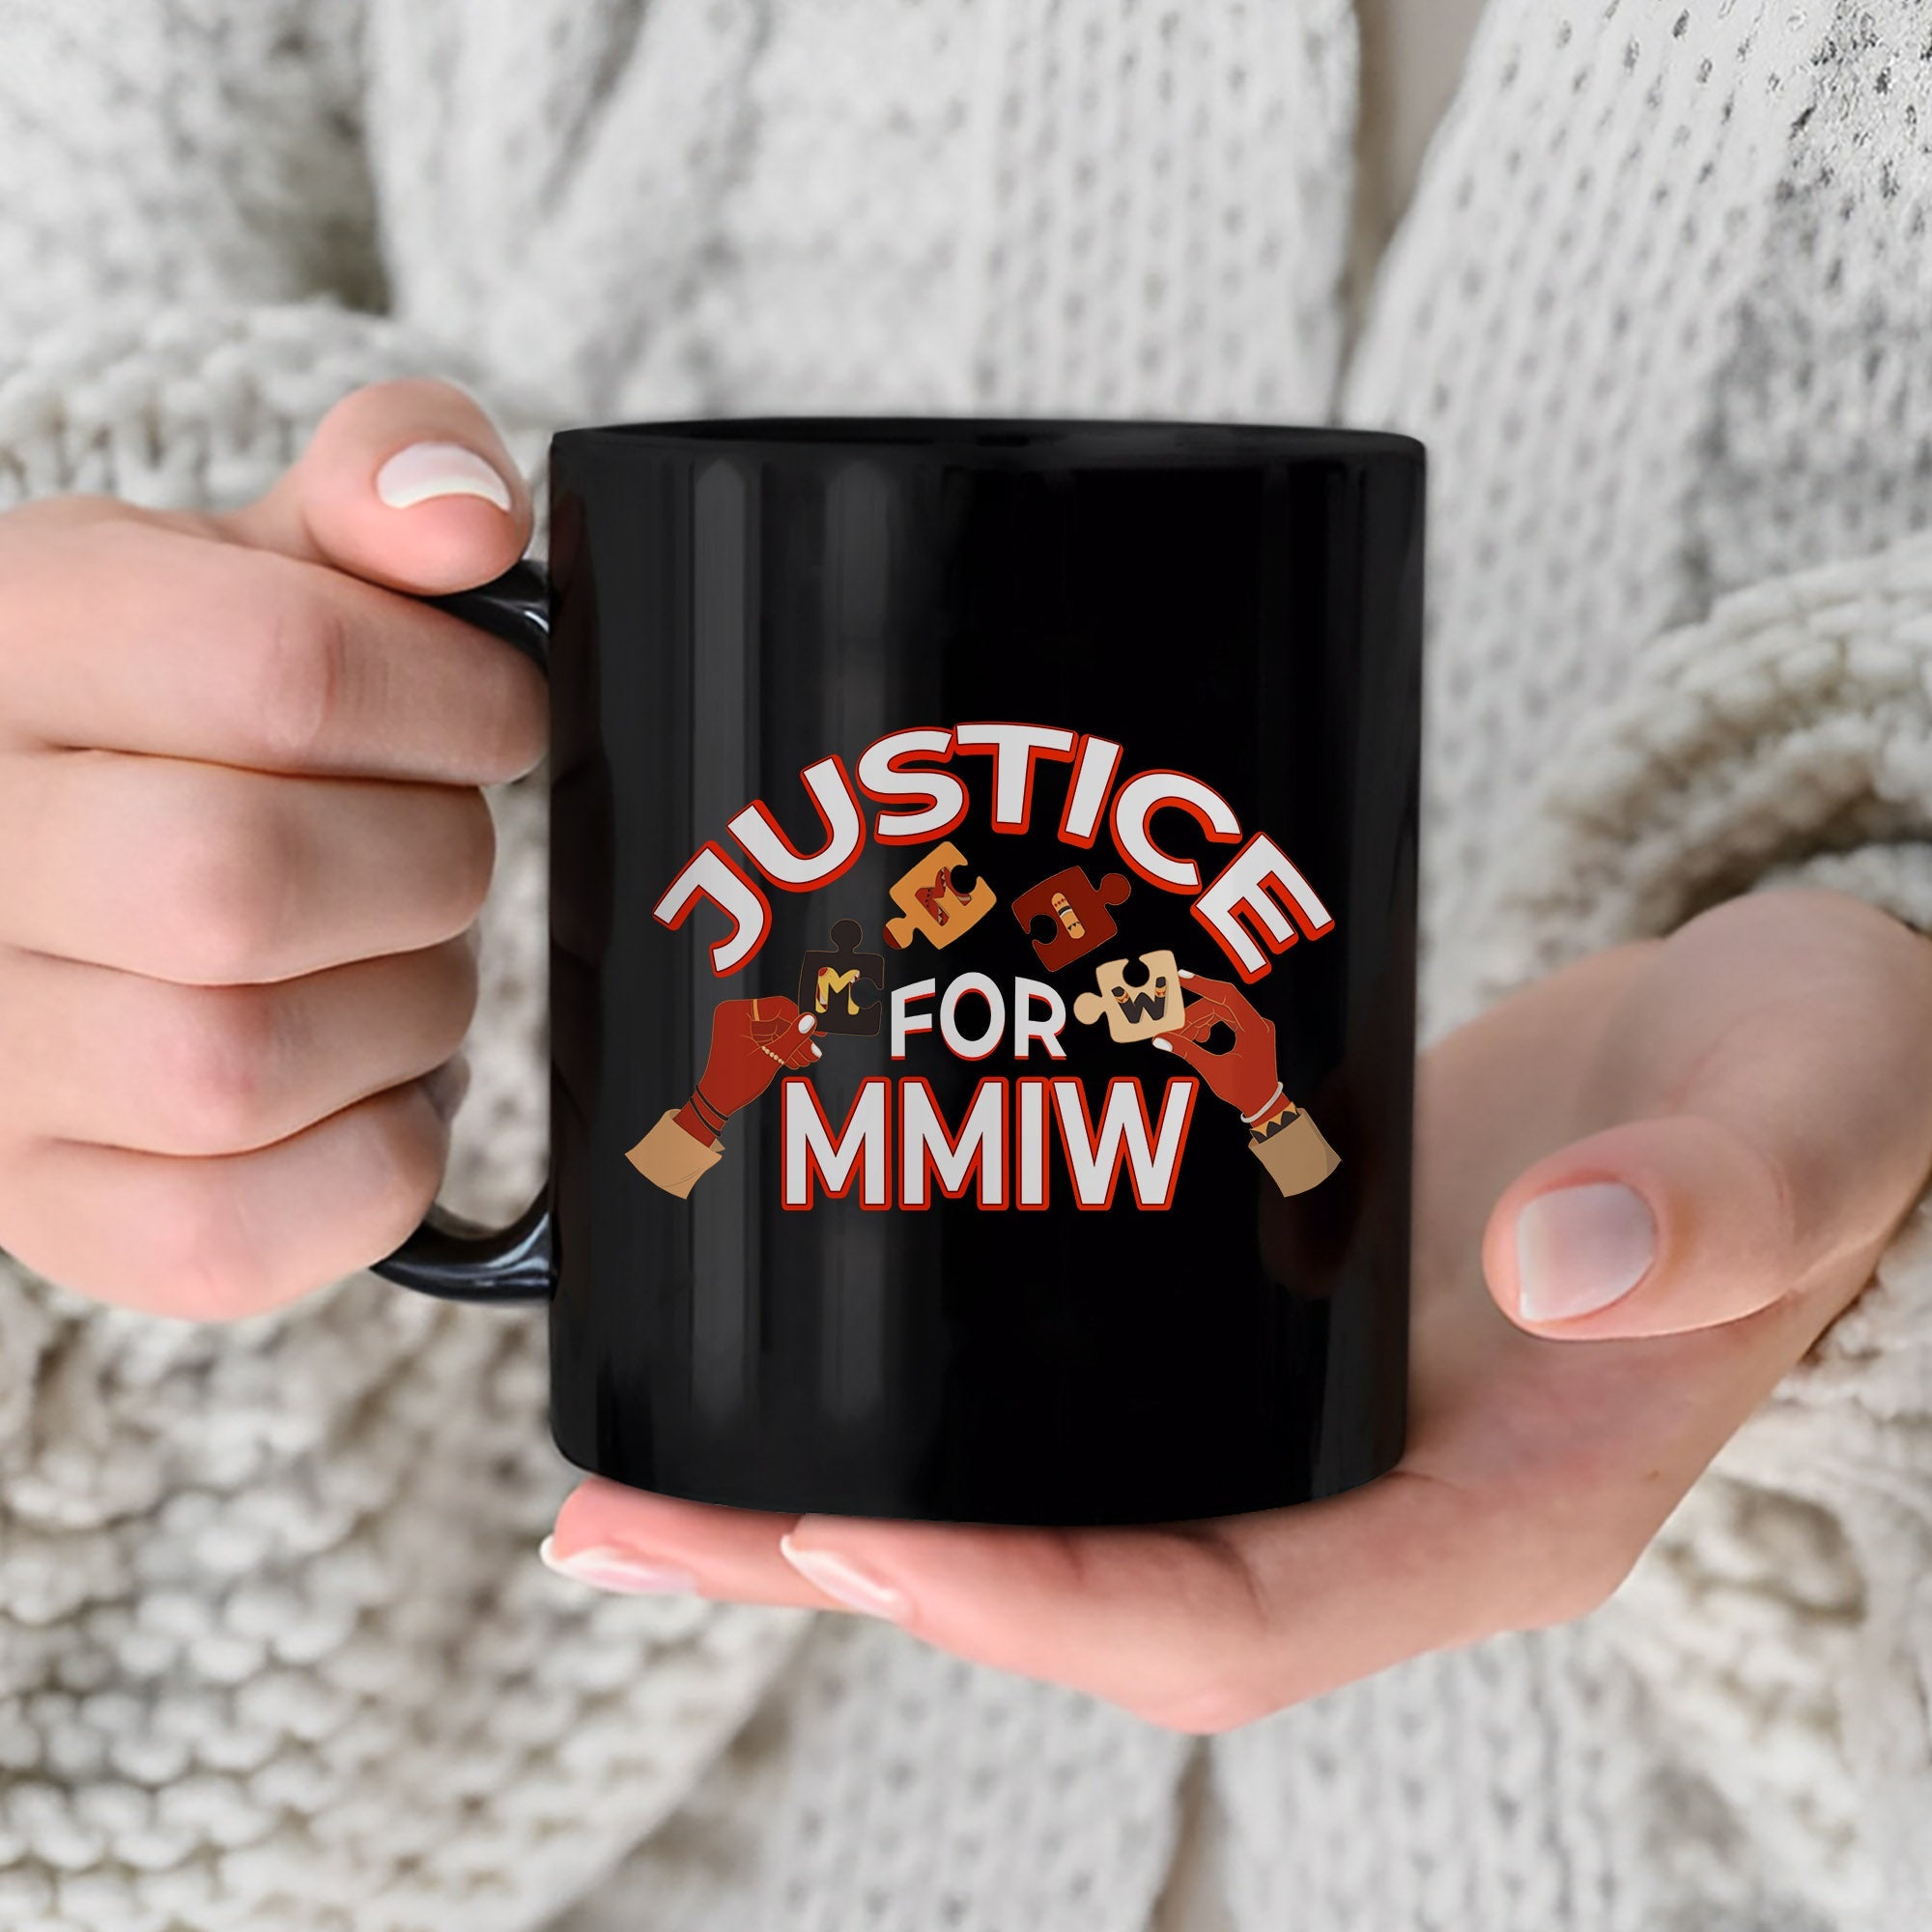 Justice For MMIW Ceramic Coffee Mug 012